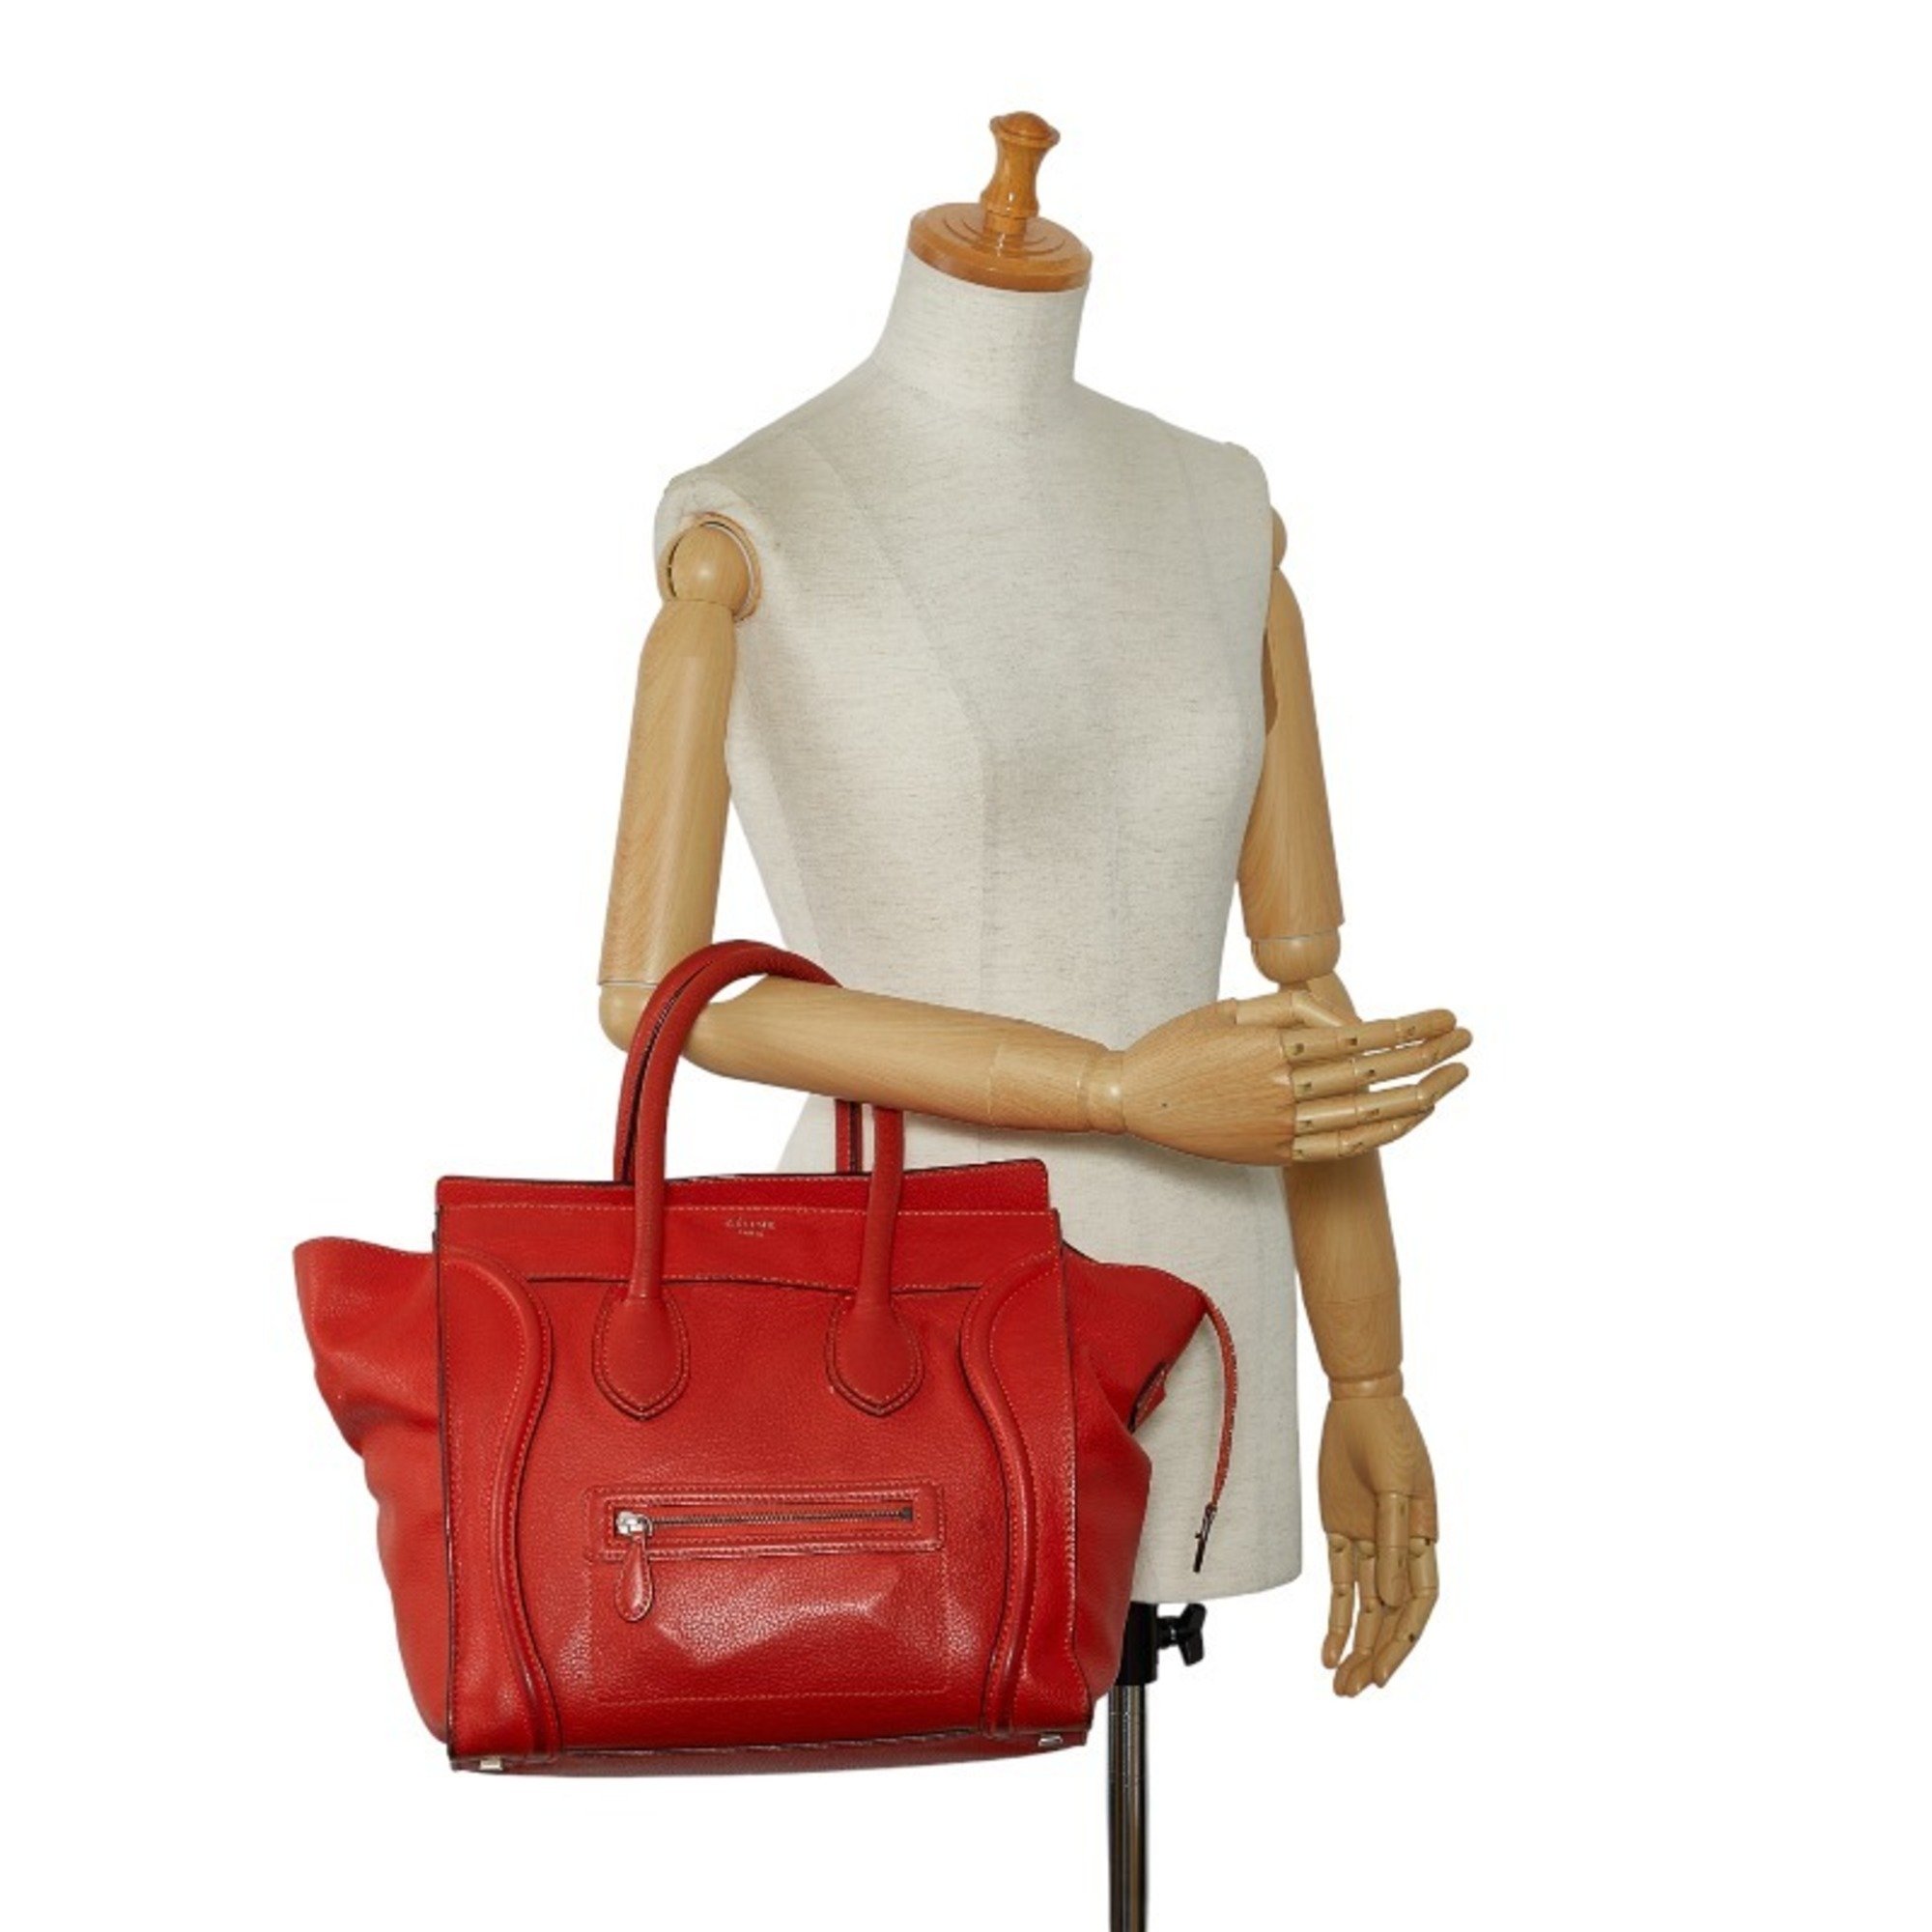 Celine Luggage Shopper Handbag 165213 Orange Leather Women's CELINE